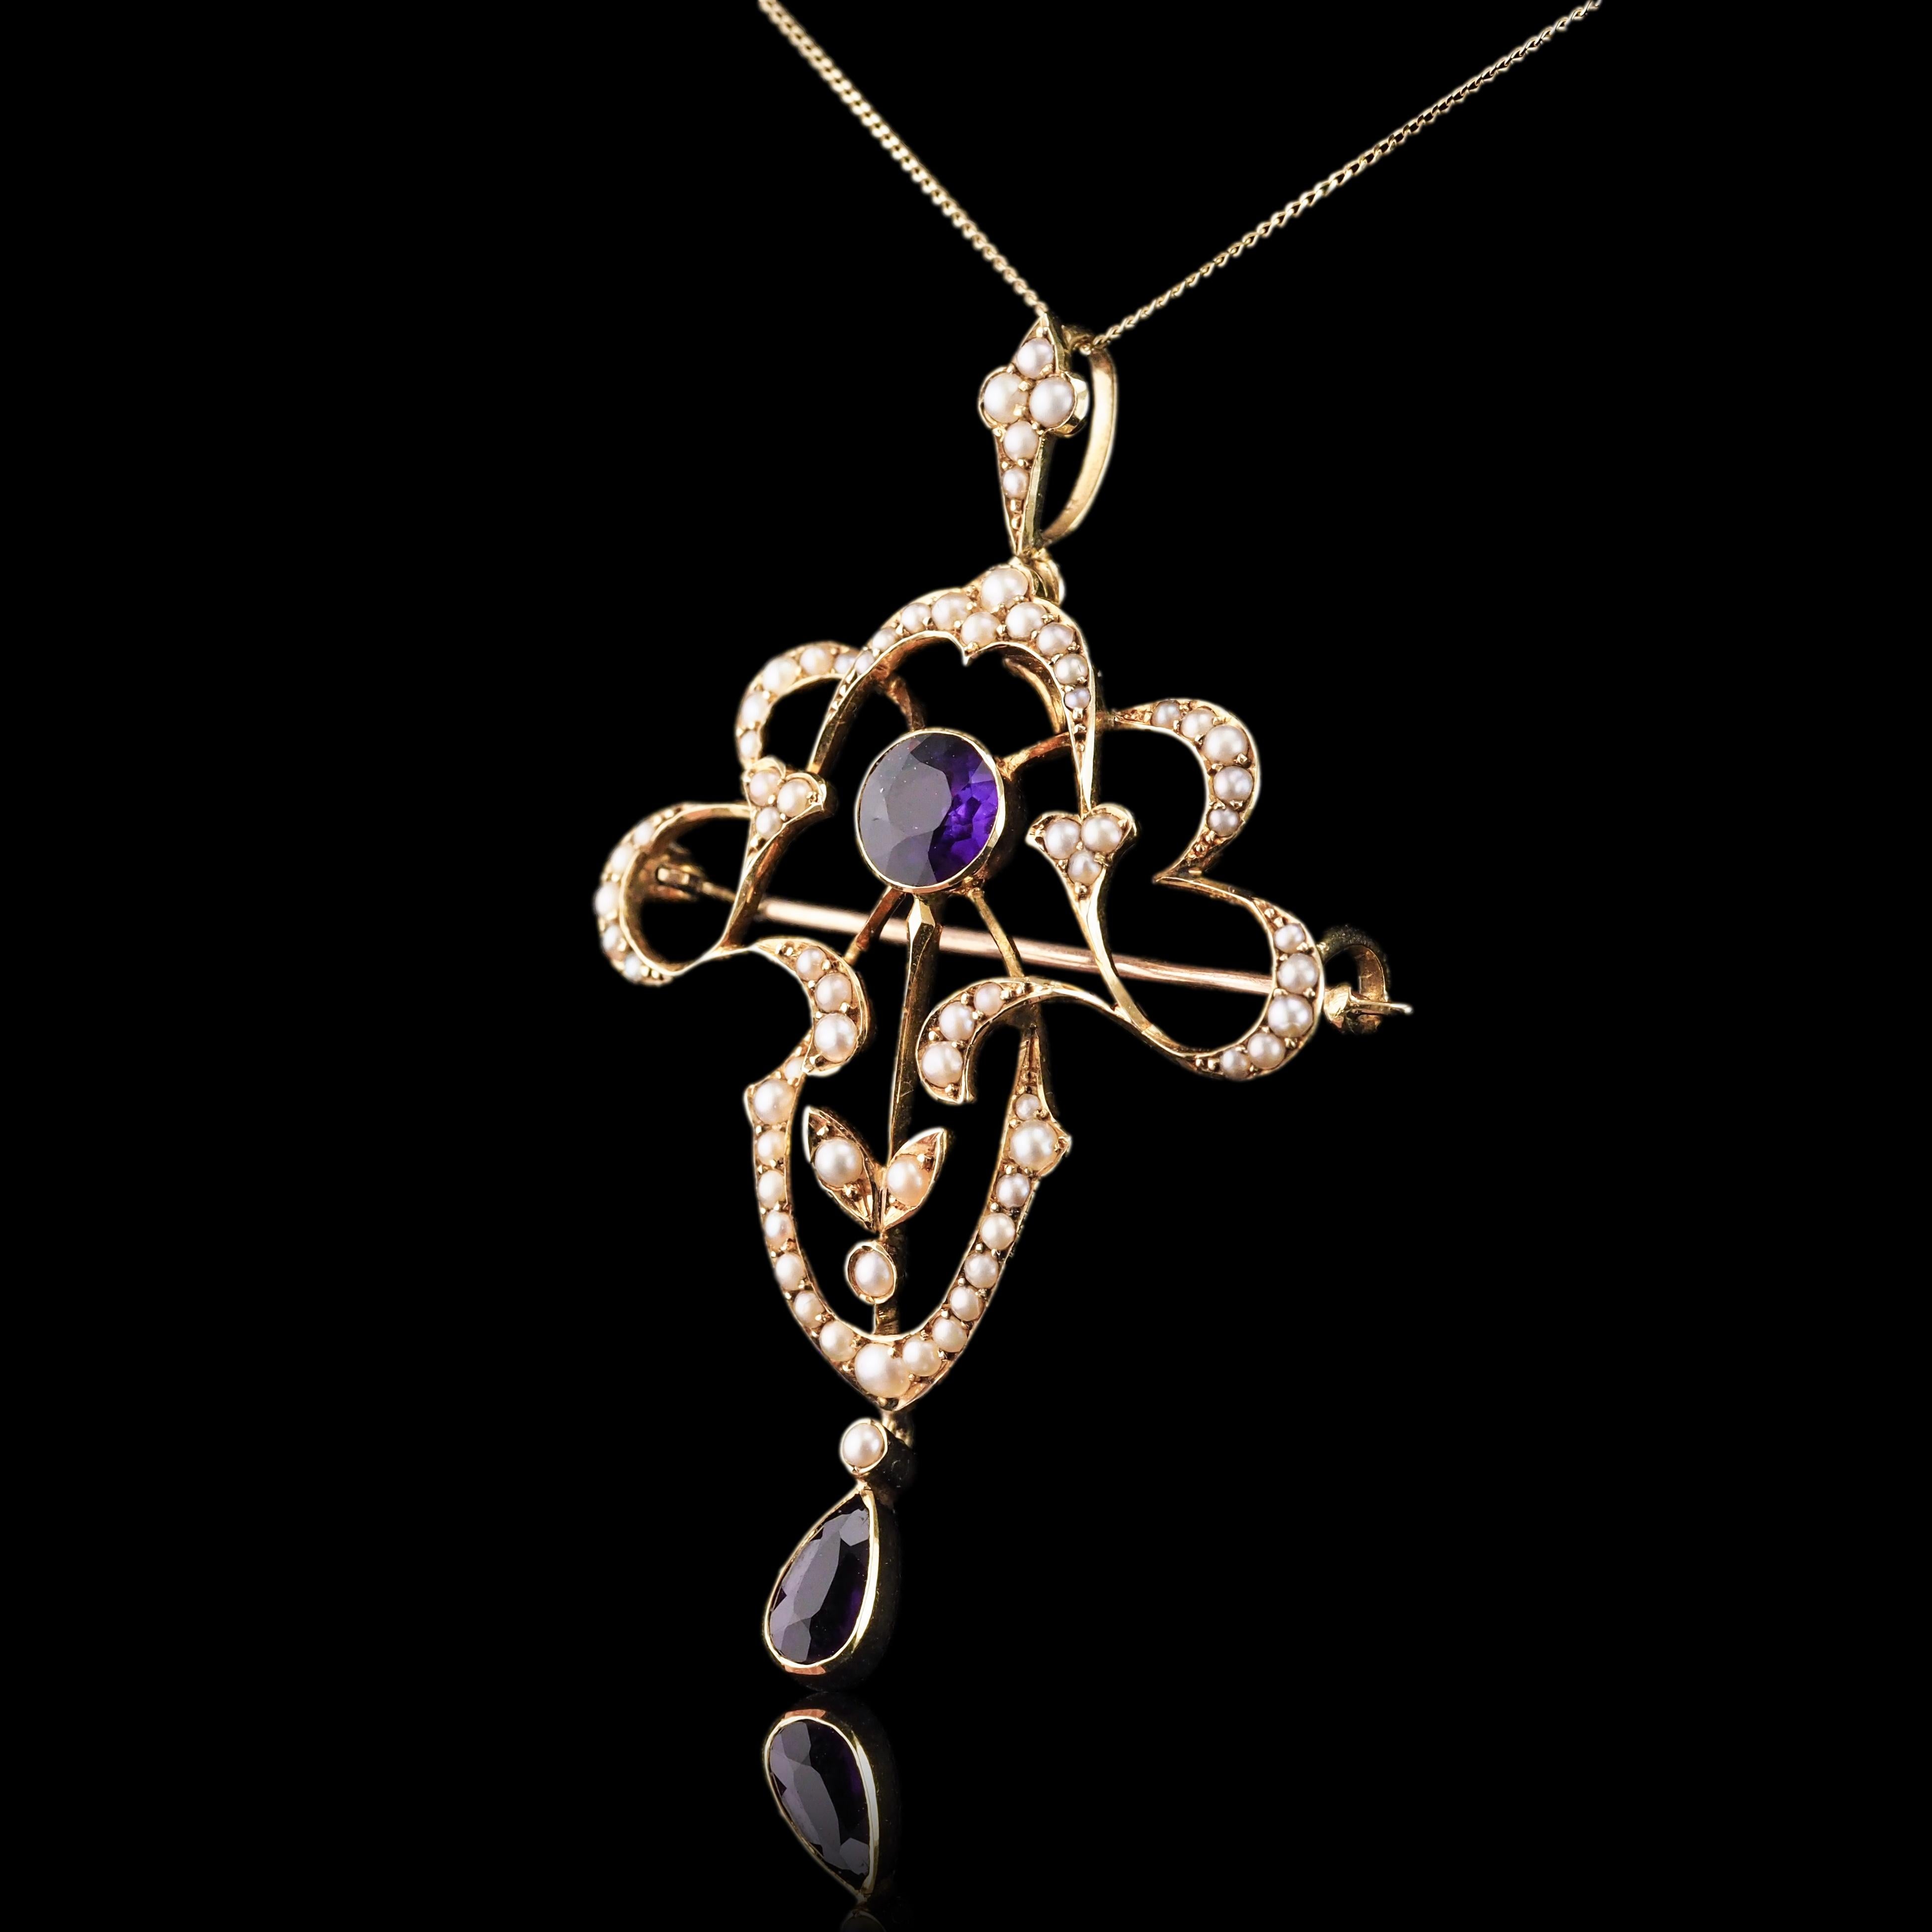 Antique Edwardian Amethyst & Seed Pearl 15K Gold Pendant Necklace Art Nouveau  For Sale 8